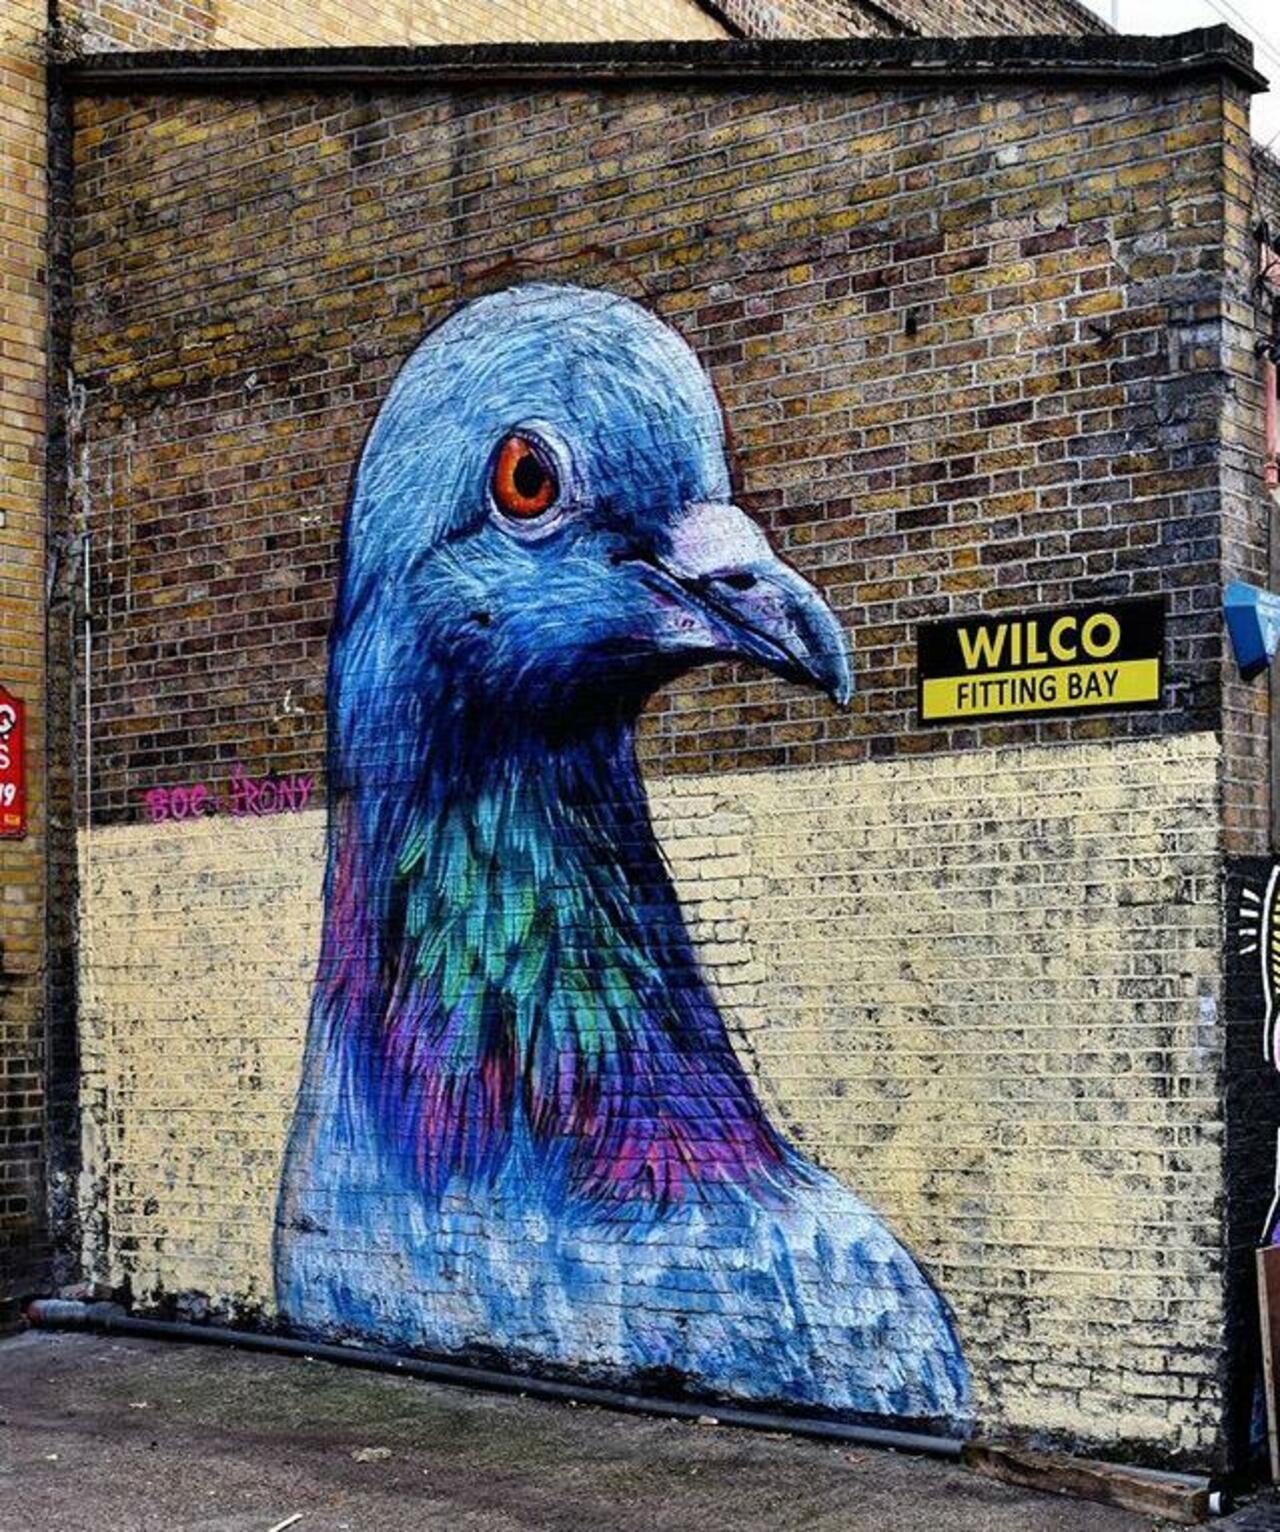 RT @Kickstartsucces: Street Art by Placee Boe & whoamirony in London 

#art #graffiti #mural #streetart http://t.co/4JNwuMZxOK